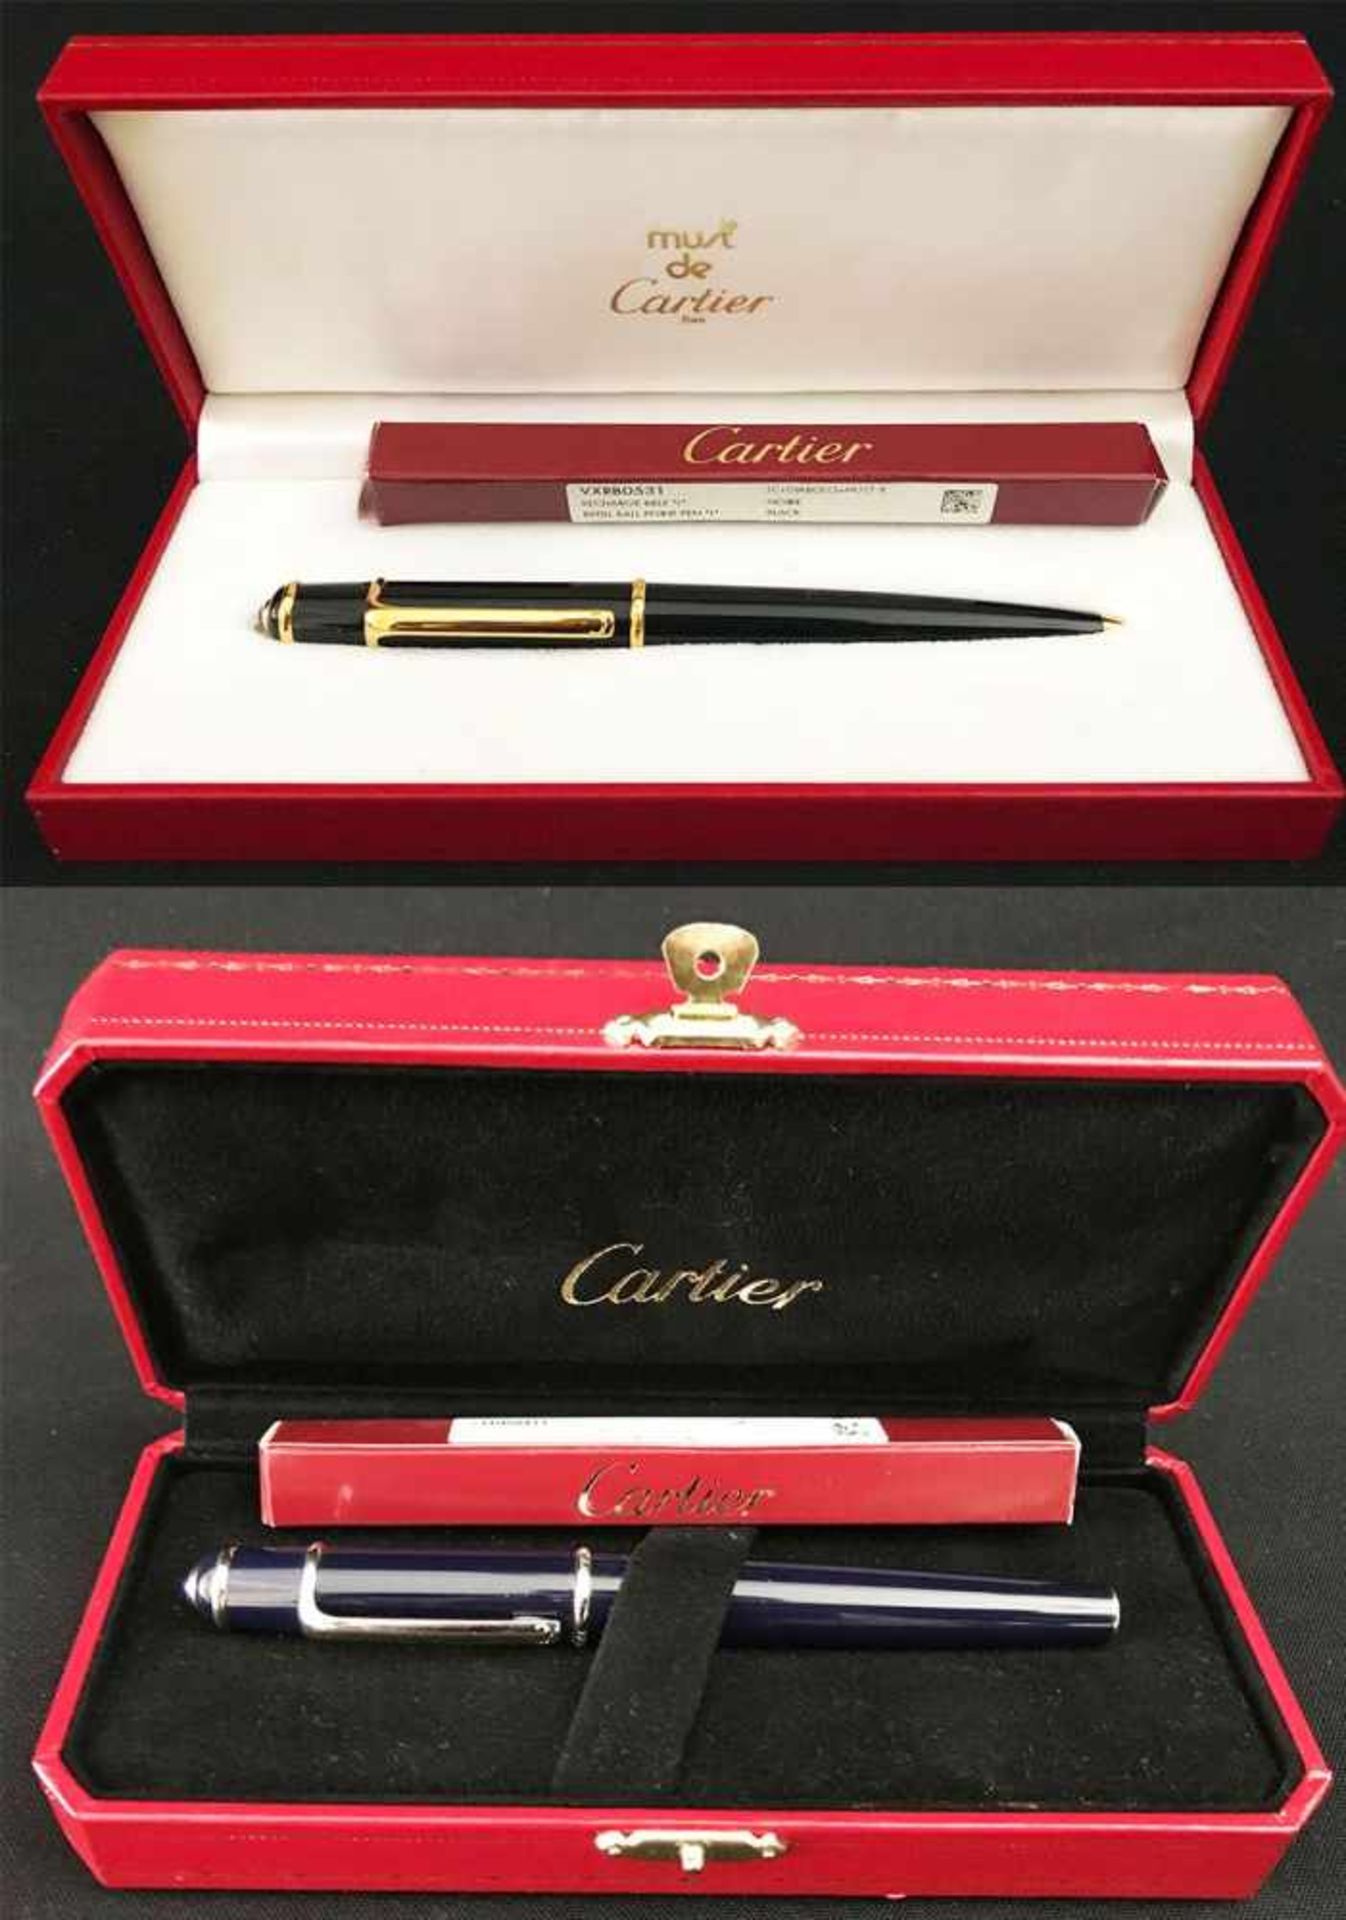 Cartier, 2 Schreiber: Kugelschreiber, schwarz mit gold, Nachfüllmine (Refill Ball point pen "L",